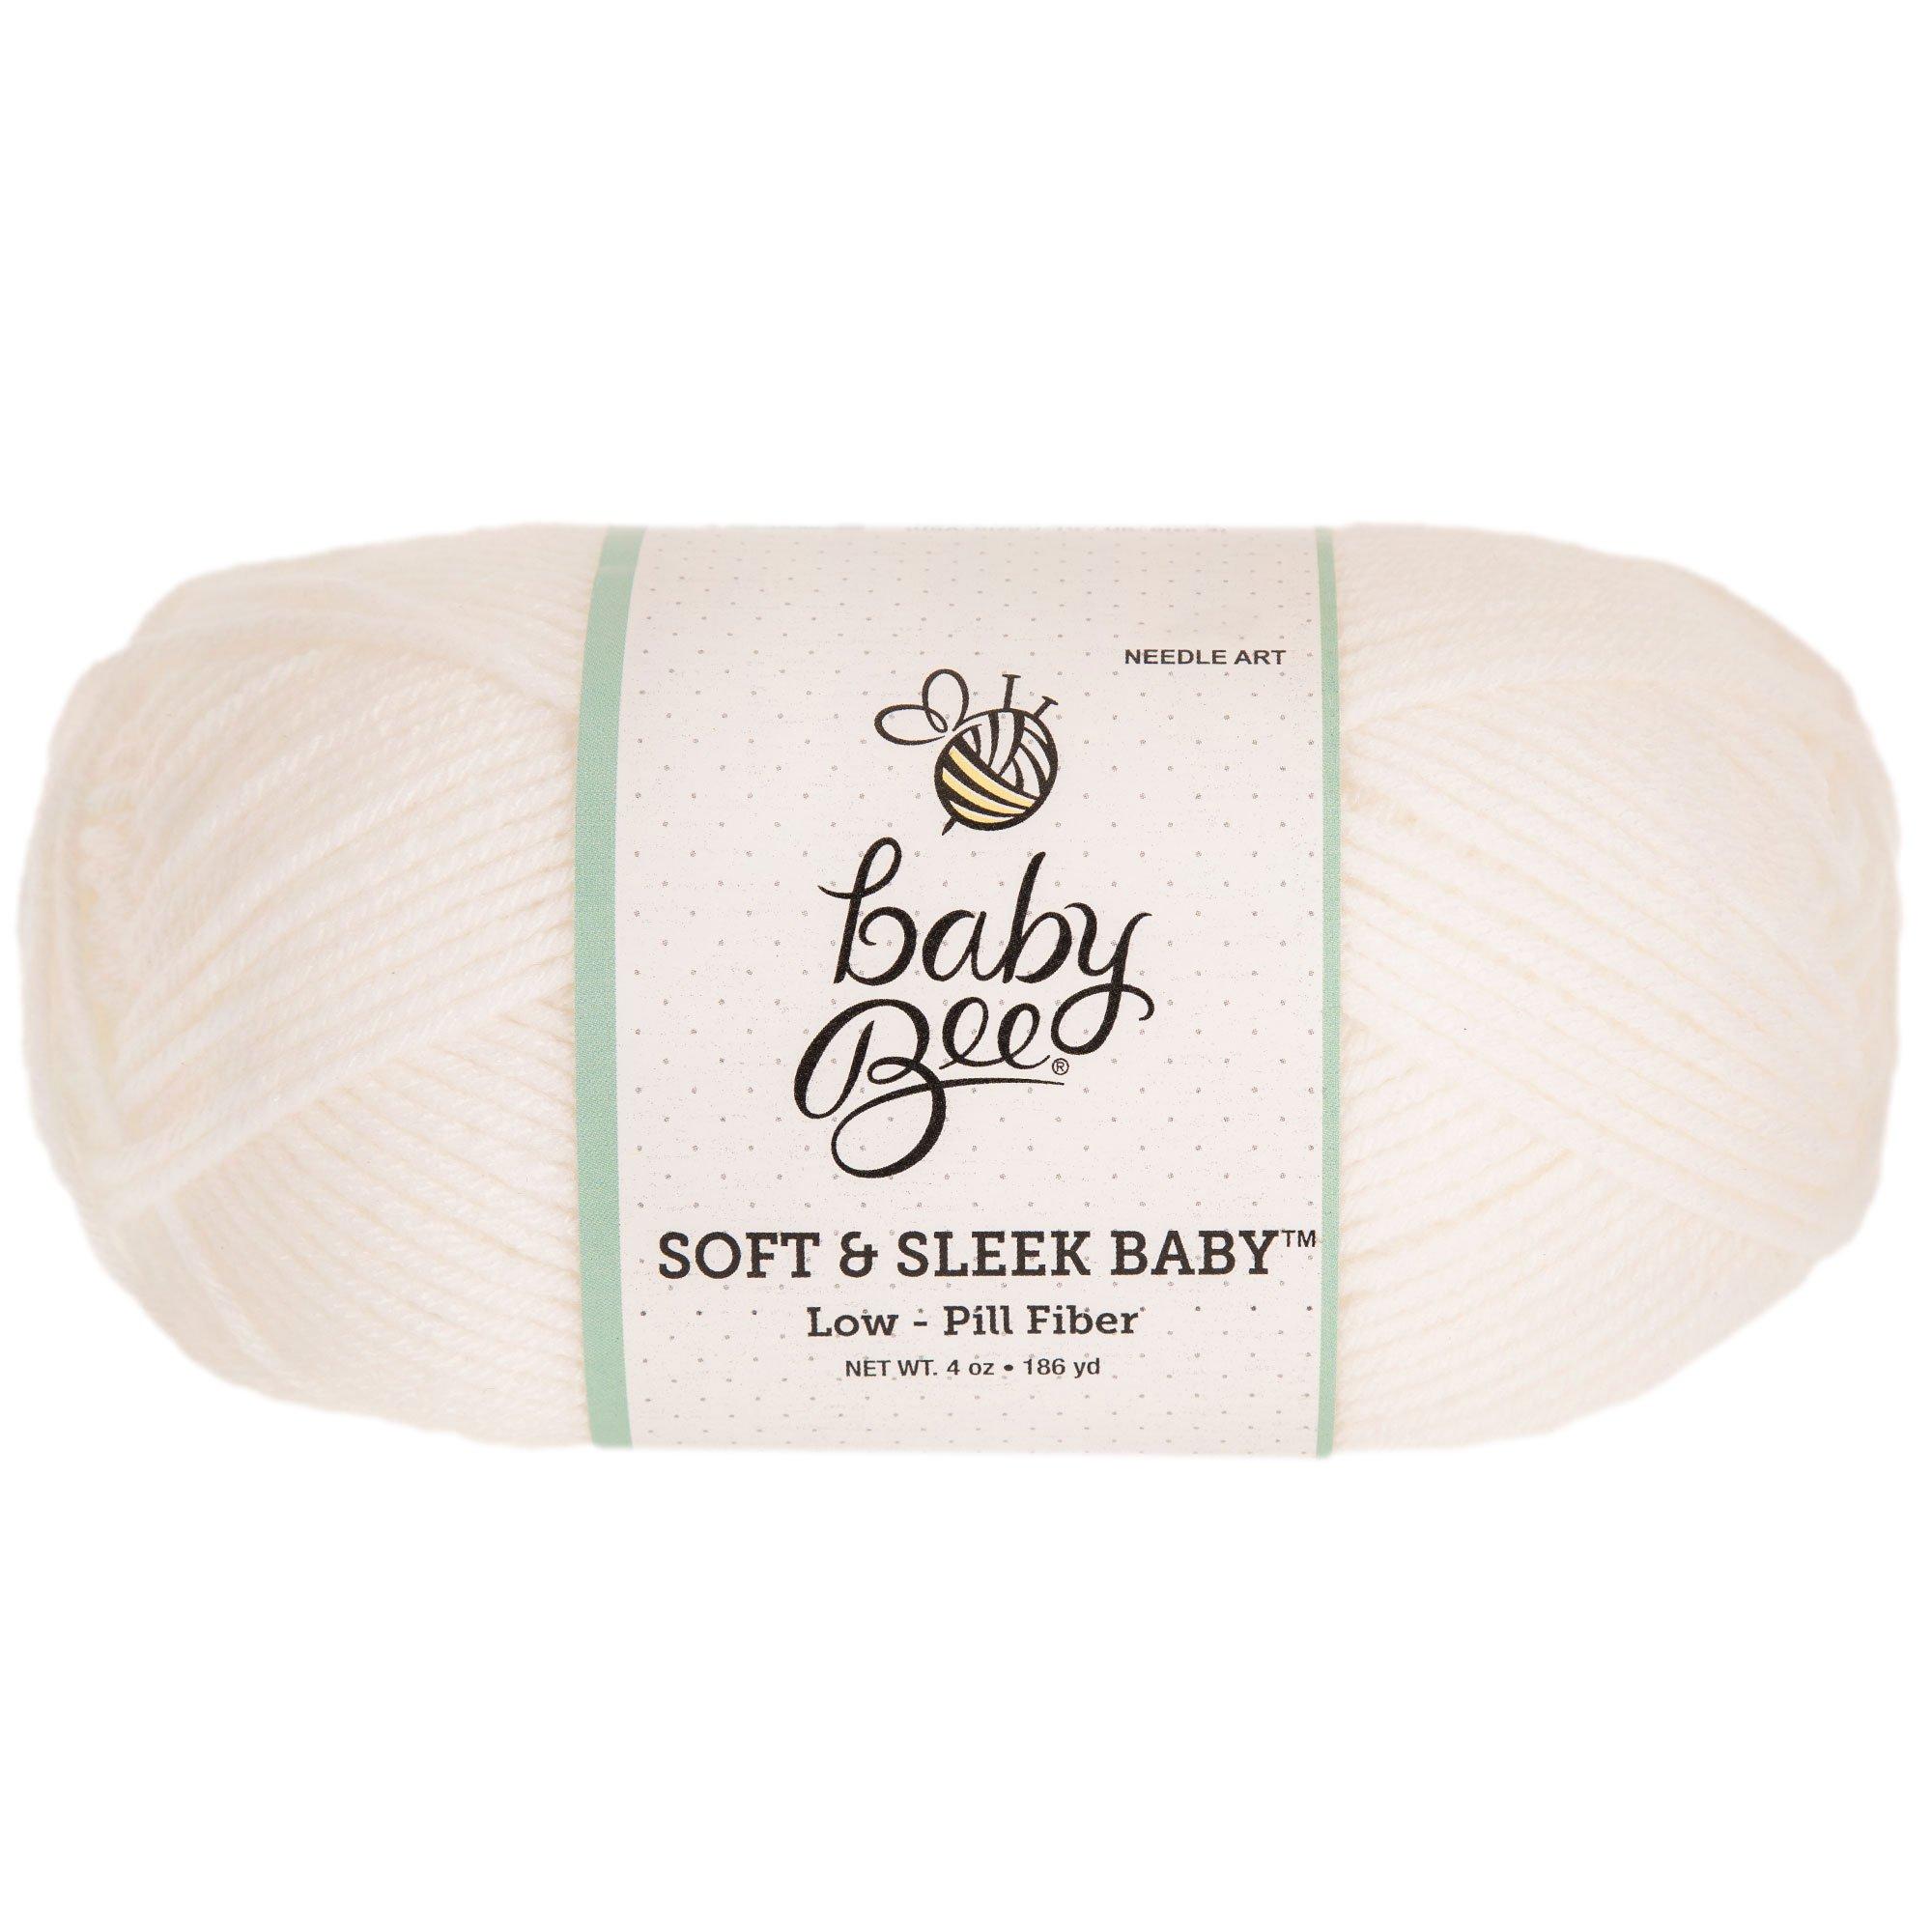 Bernat Softee Baby Yarn - Solids-Grey Marl, 1 count - Kroger